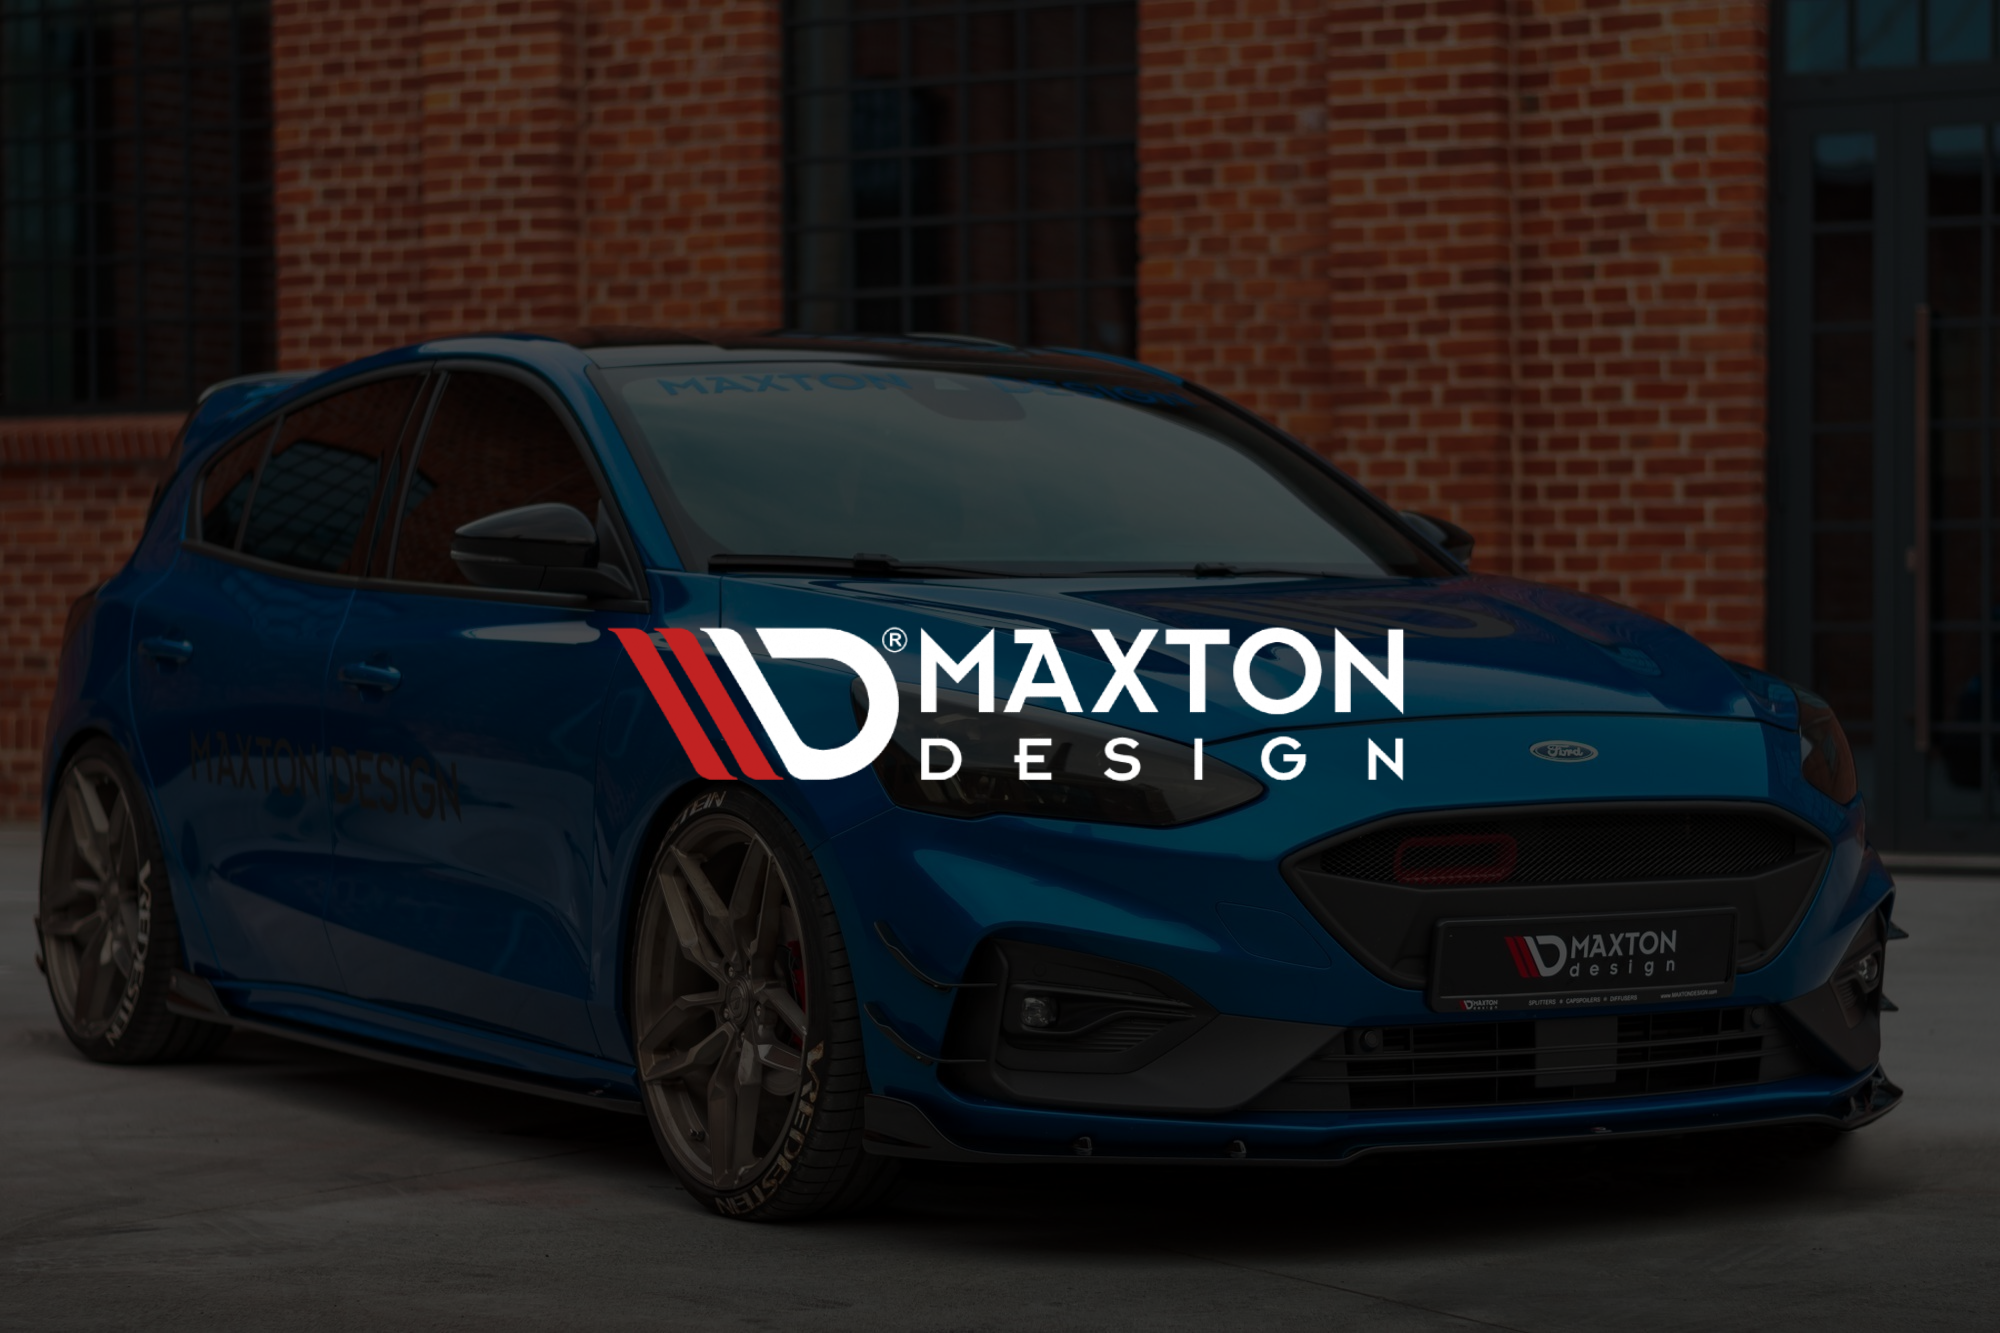 Maxton design